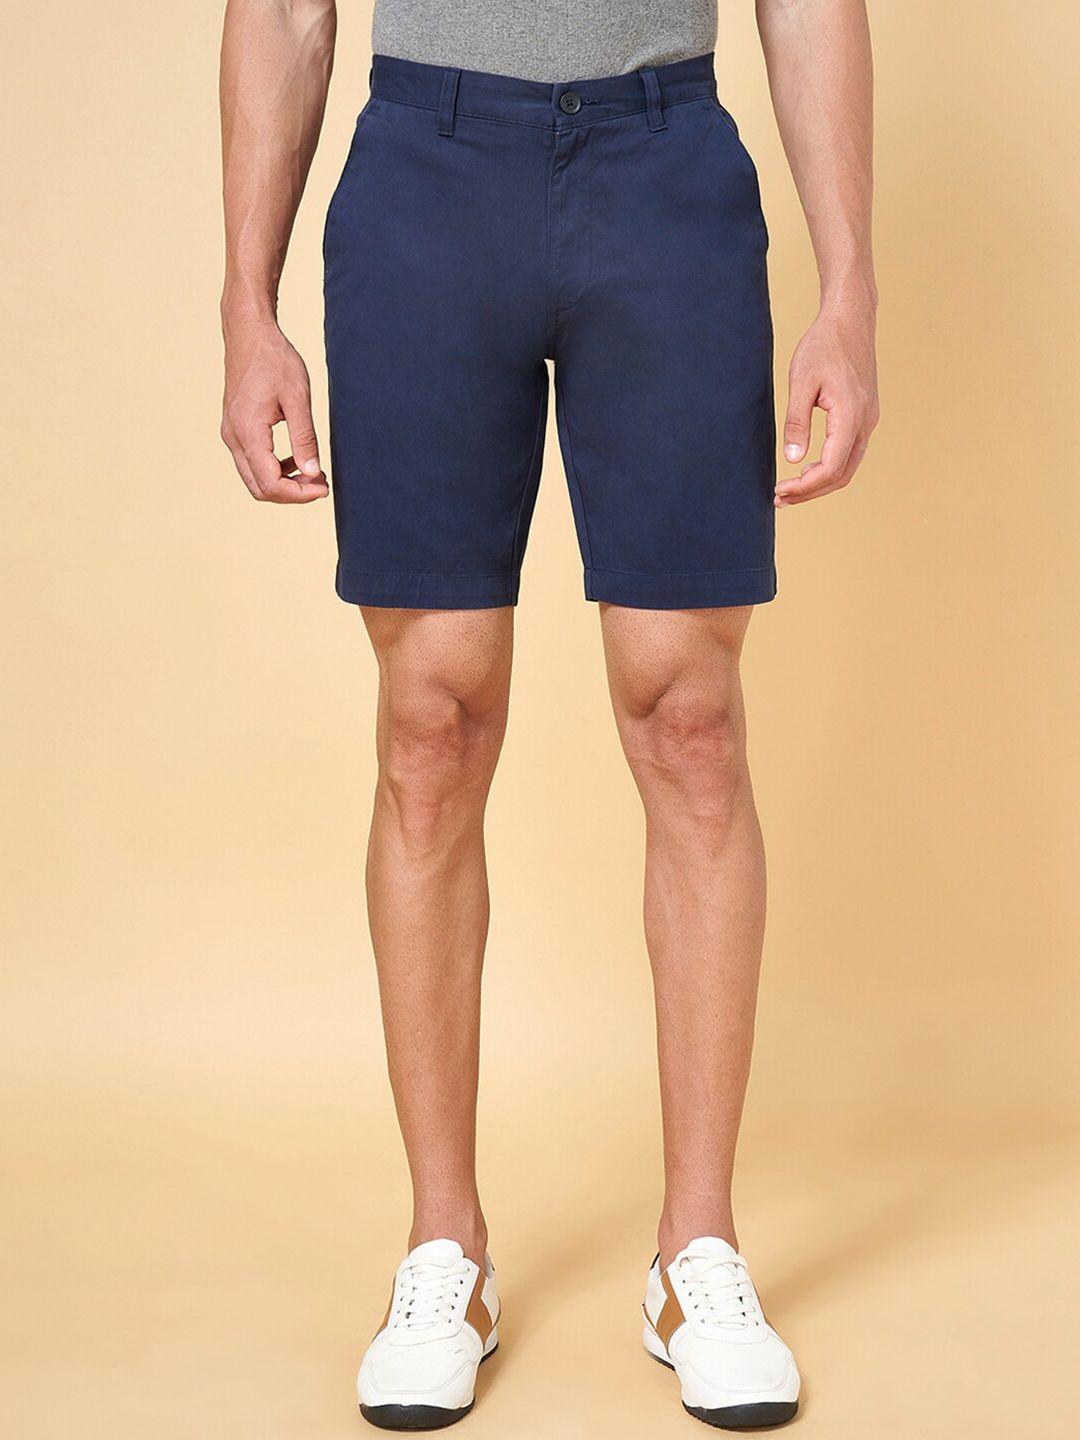 BYFORD by Pantaloons Men Slim Fit Mid-Rise Chino Shorts